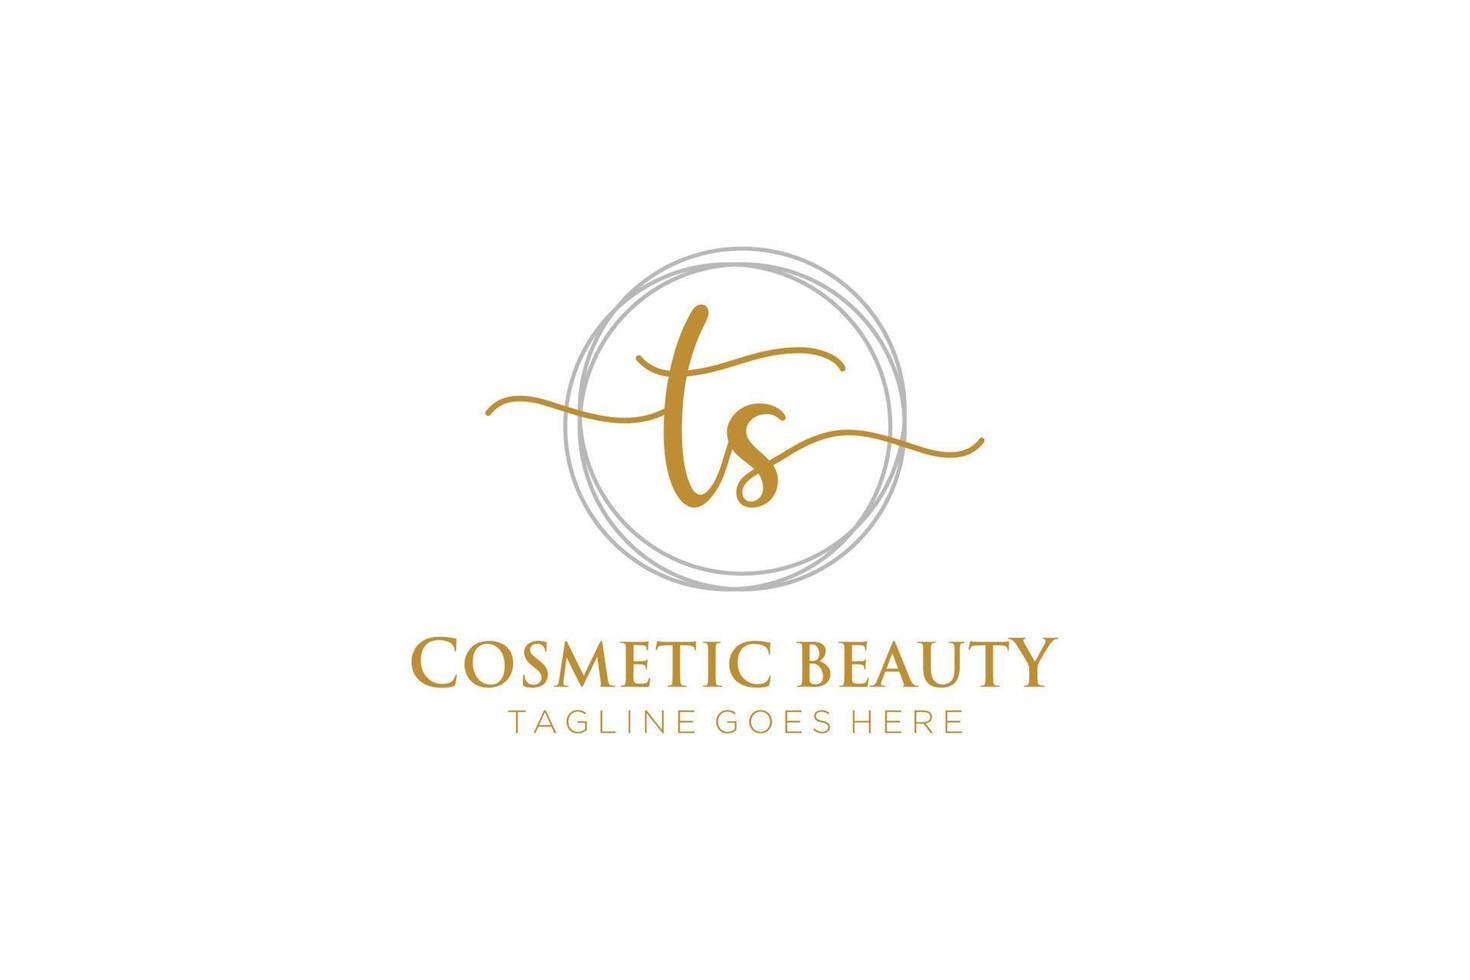 initial TS Feminine logo beauty monogram and elegant logo design, handwriting logo of initial signature, wedding, fashion, floral and botanical with creative template. vector